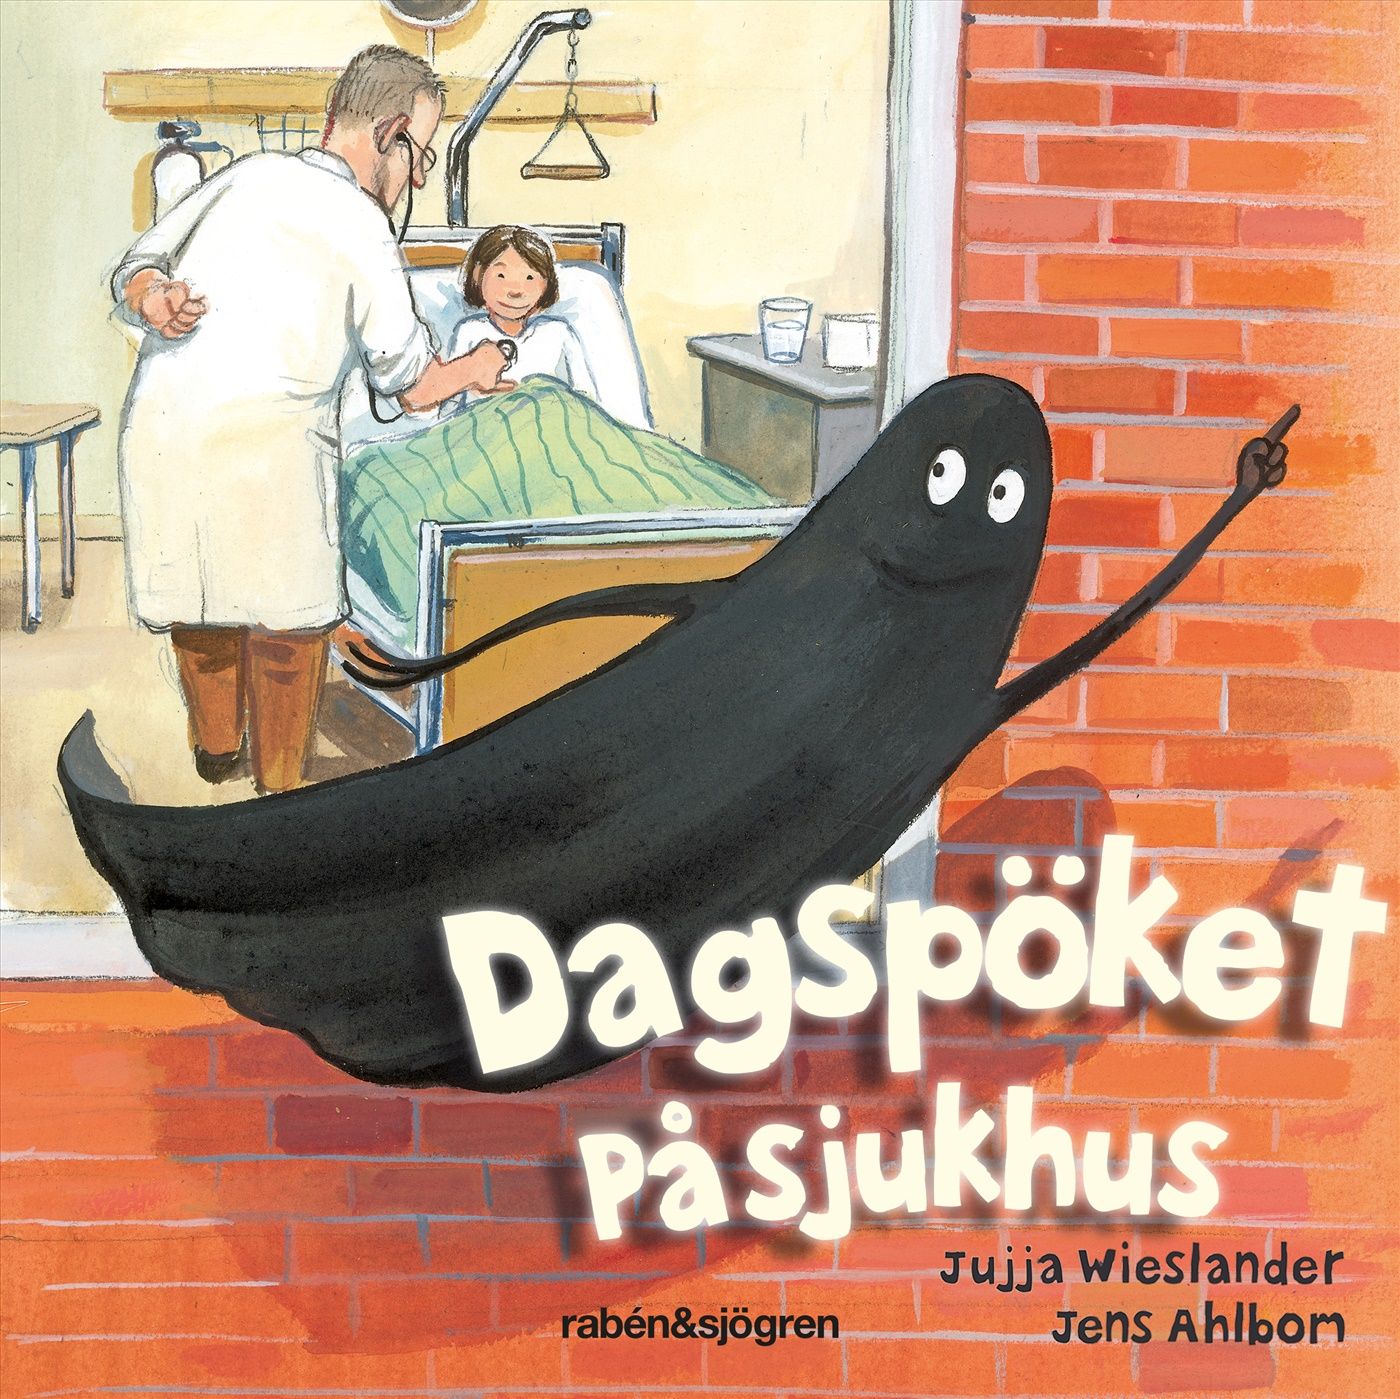 Dagspöket på sjukhus, audiobook by Jujja Wieslander